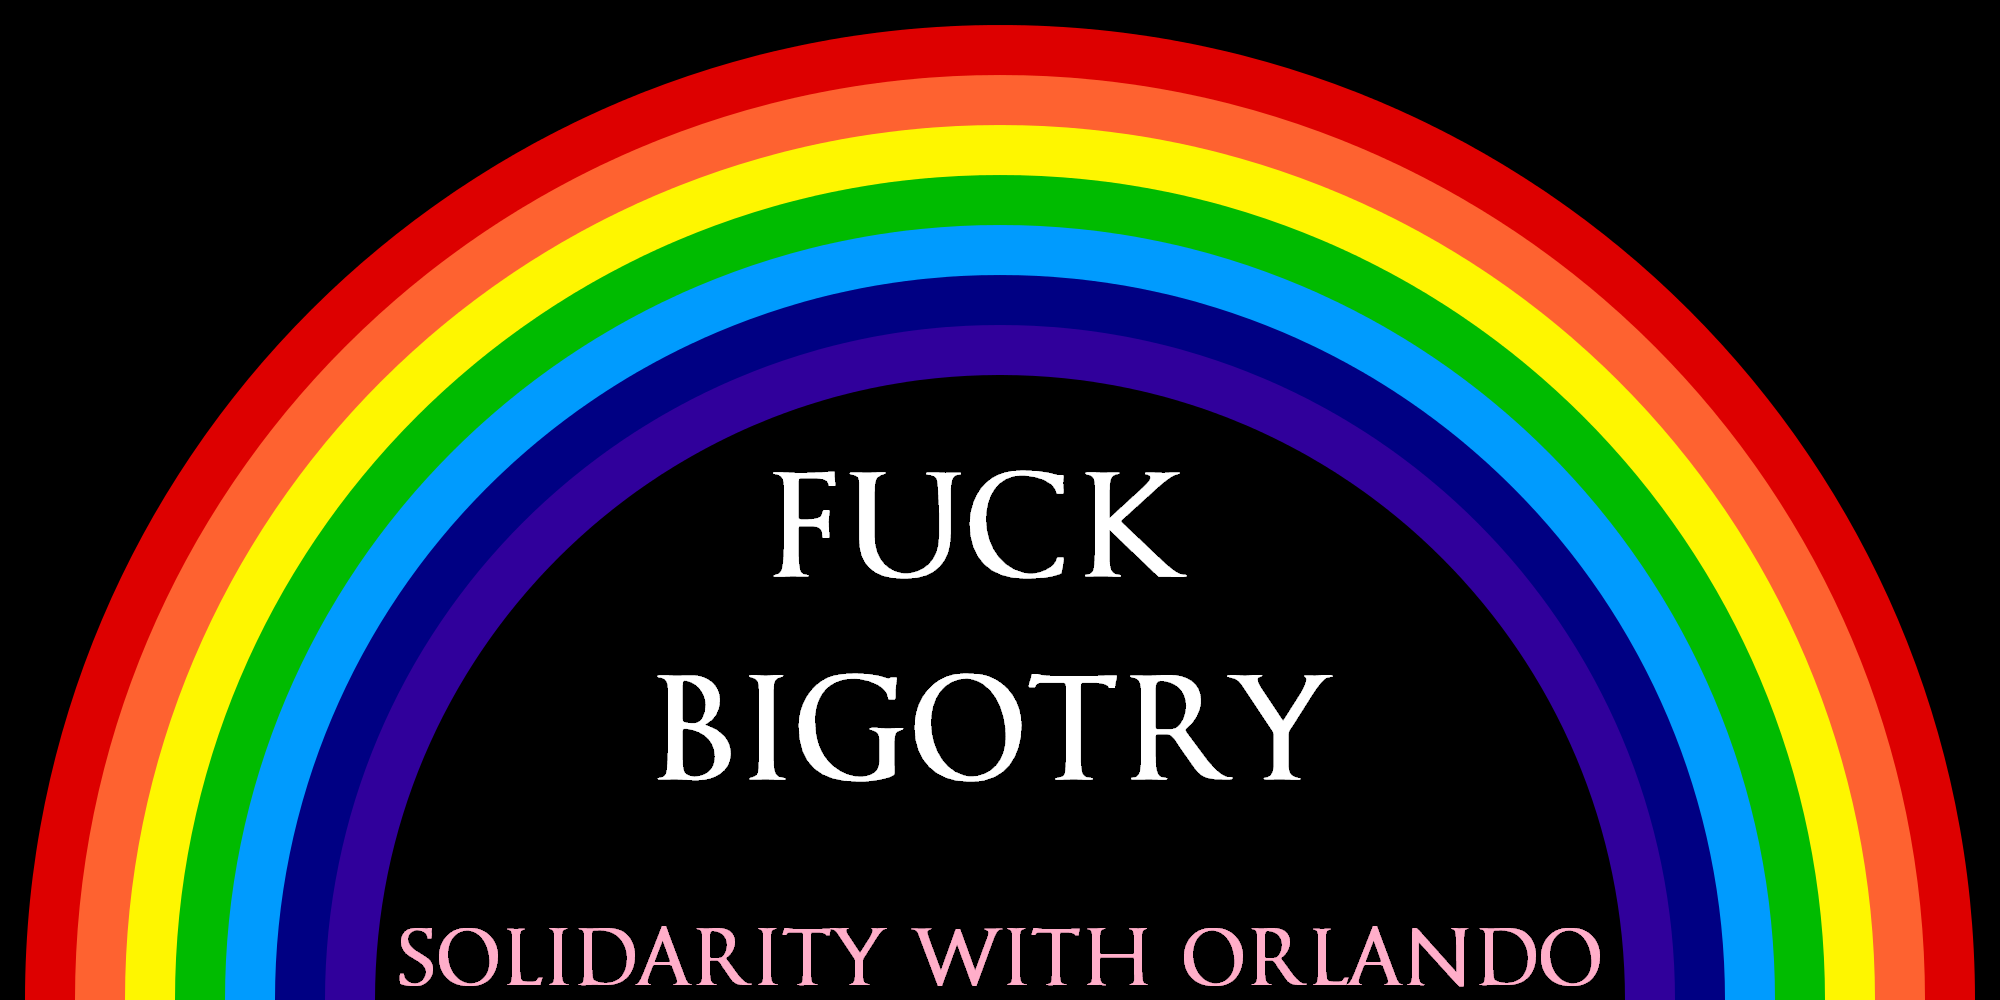 Fuck bigotry. Solidarity with Orlando after the Pulse nightclub shooting.